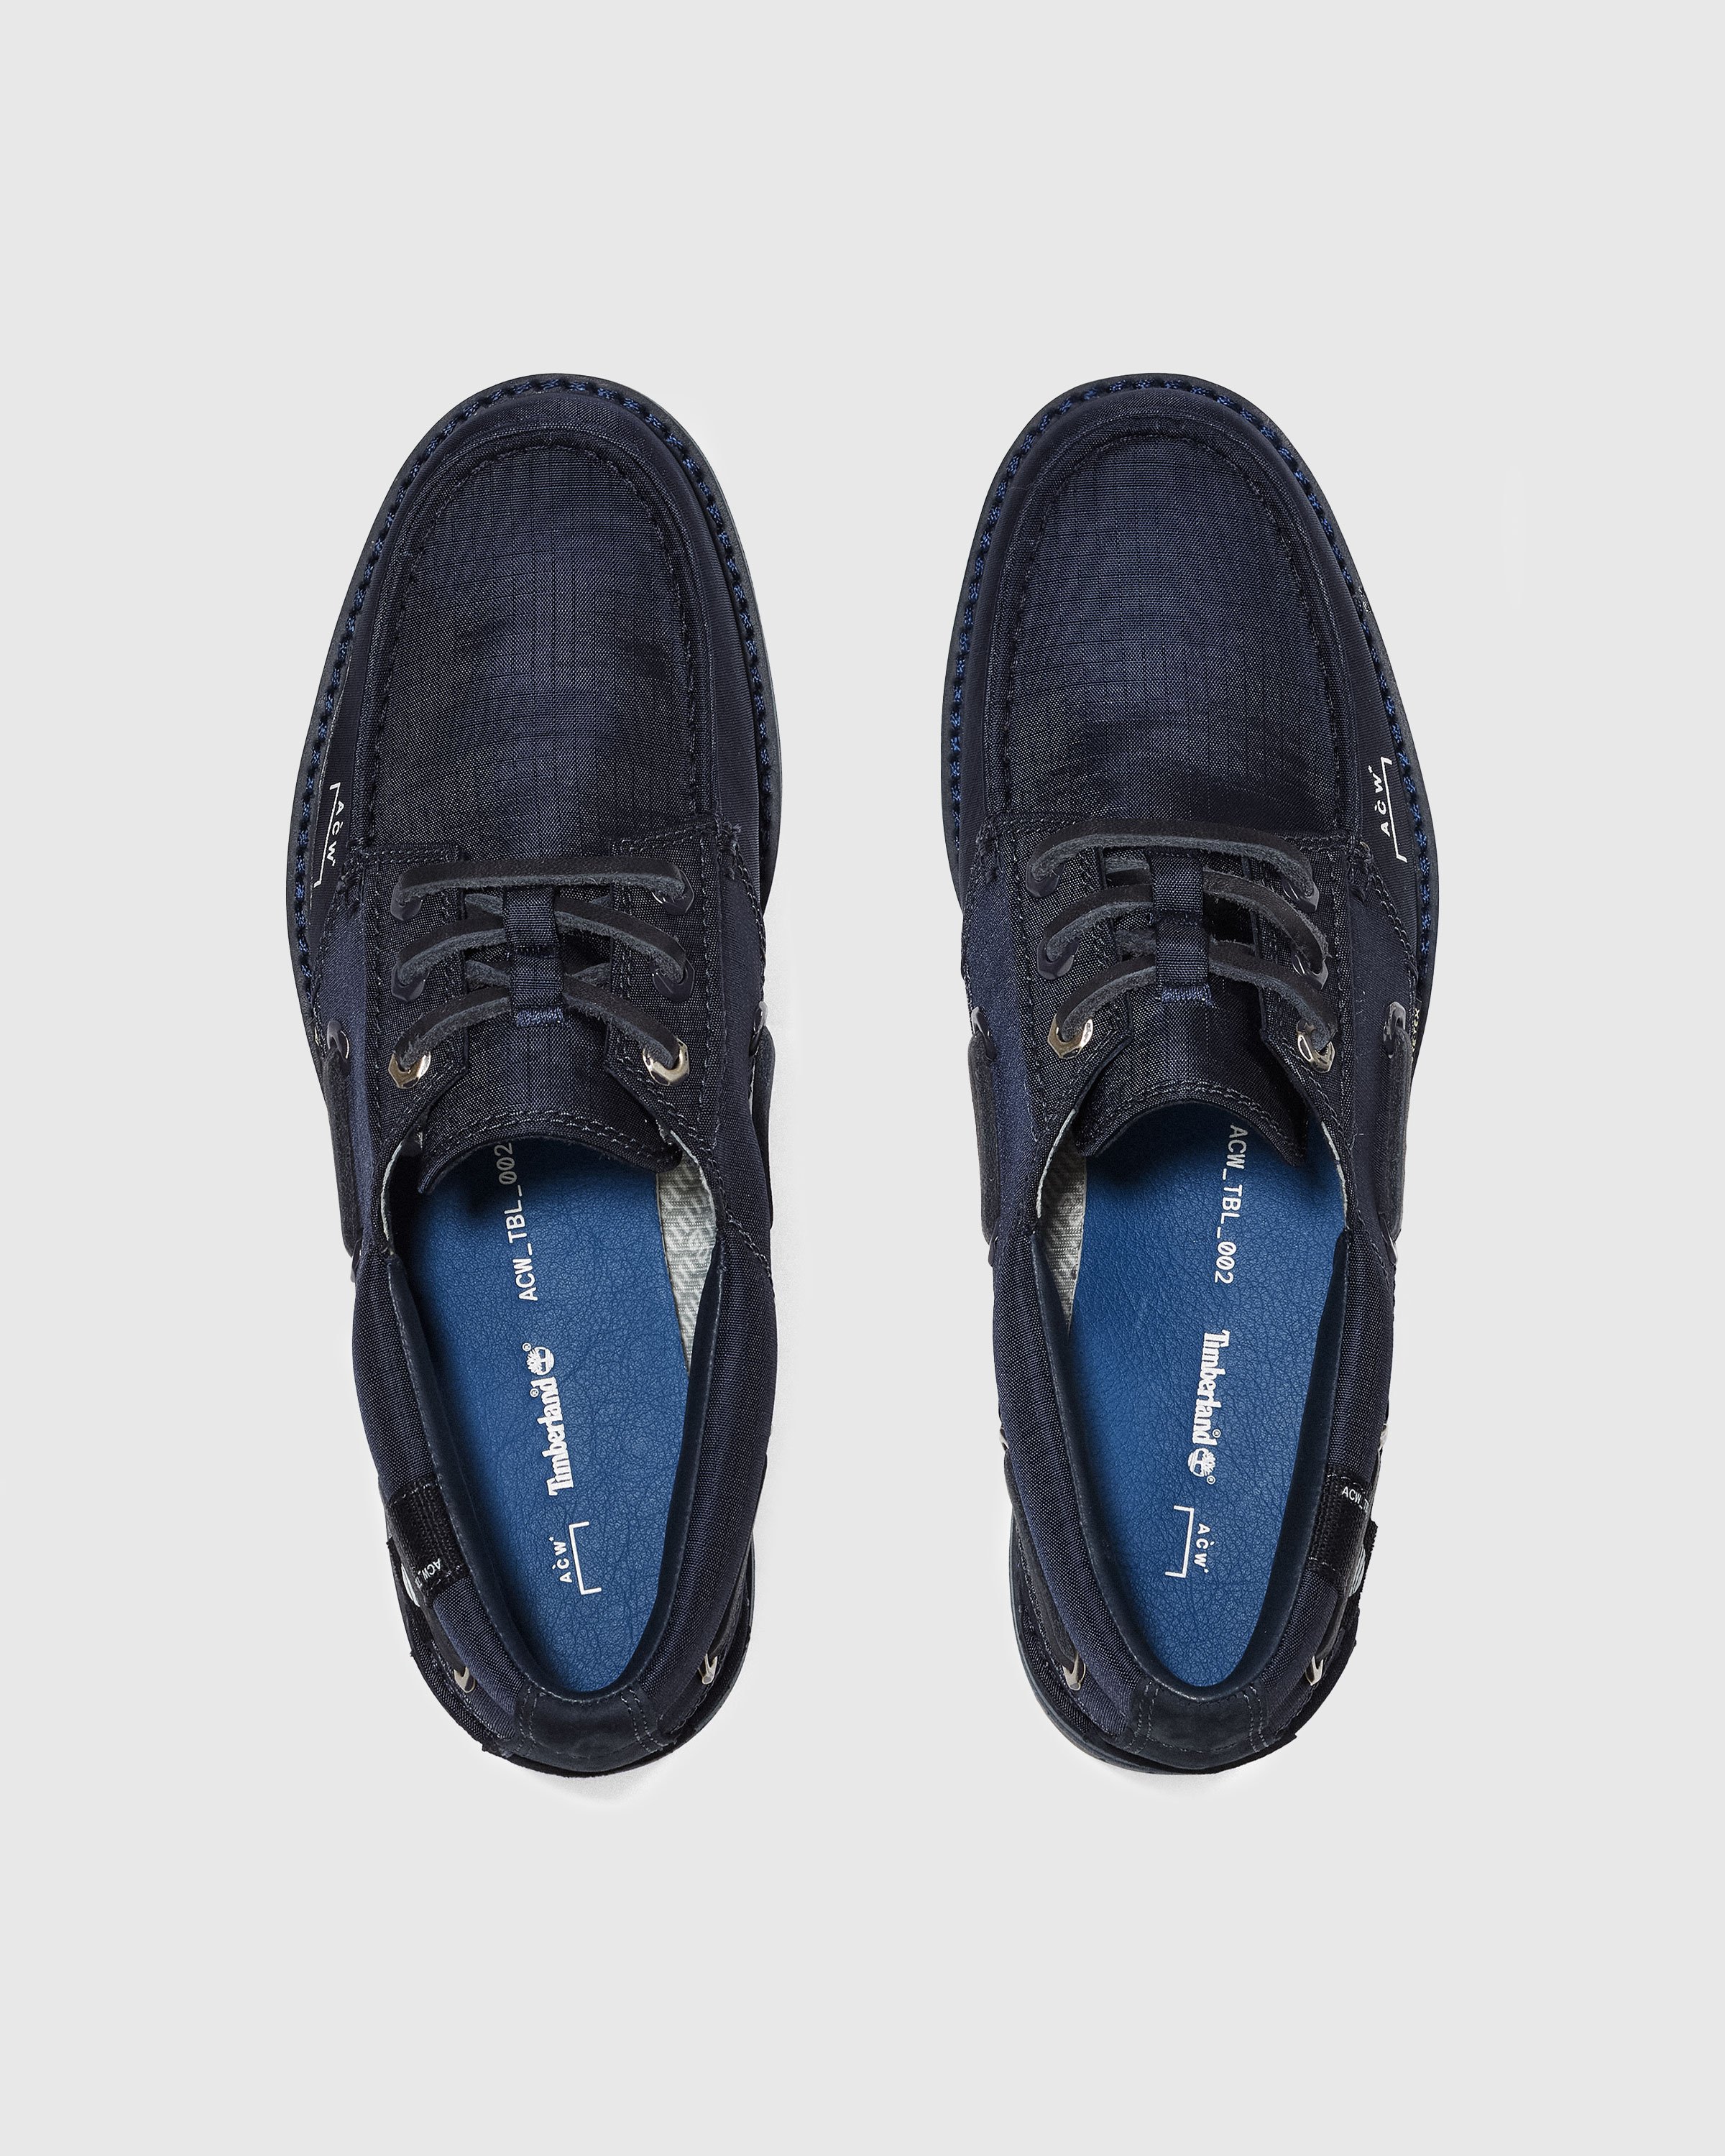 A-Cold-Wall* x Timberland - 3-Eye Boat Shoe Dark Sapphire Navy - Footwear - Blue - Image 5